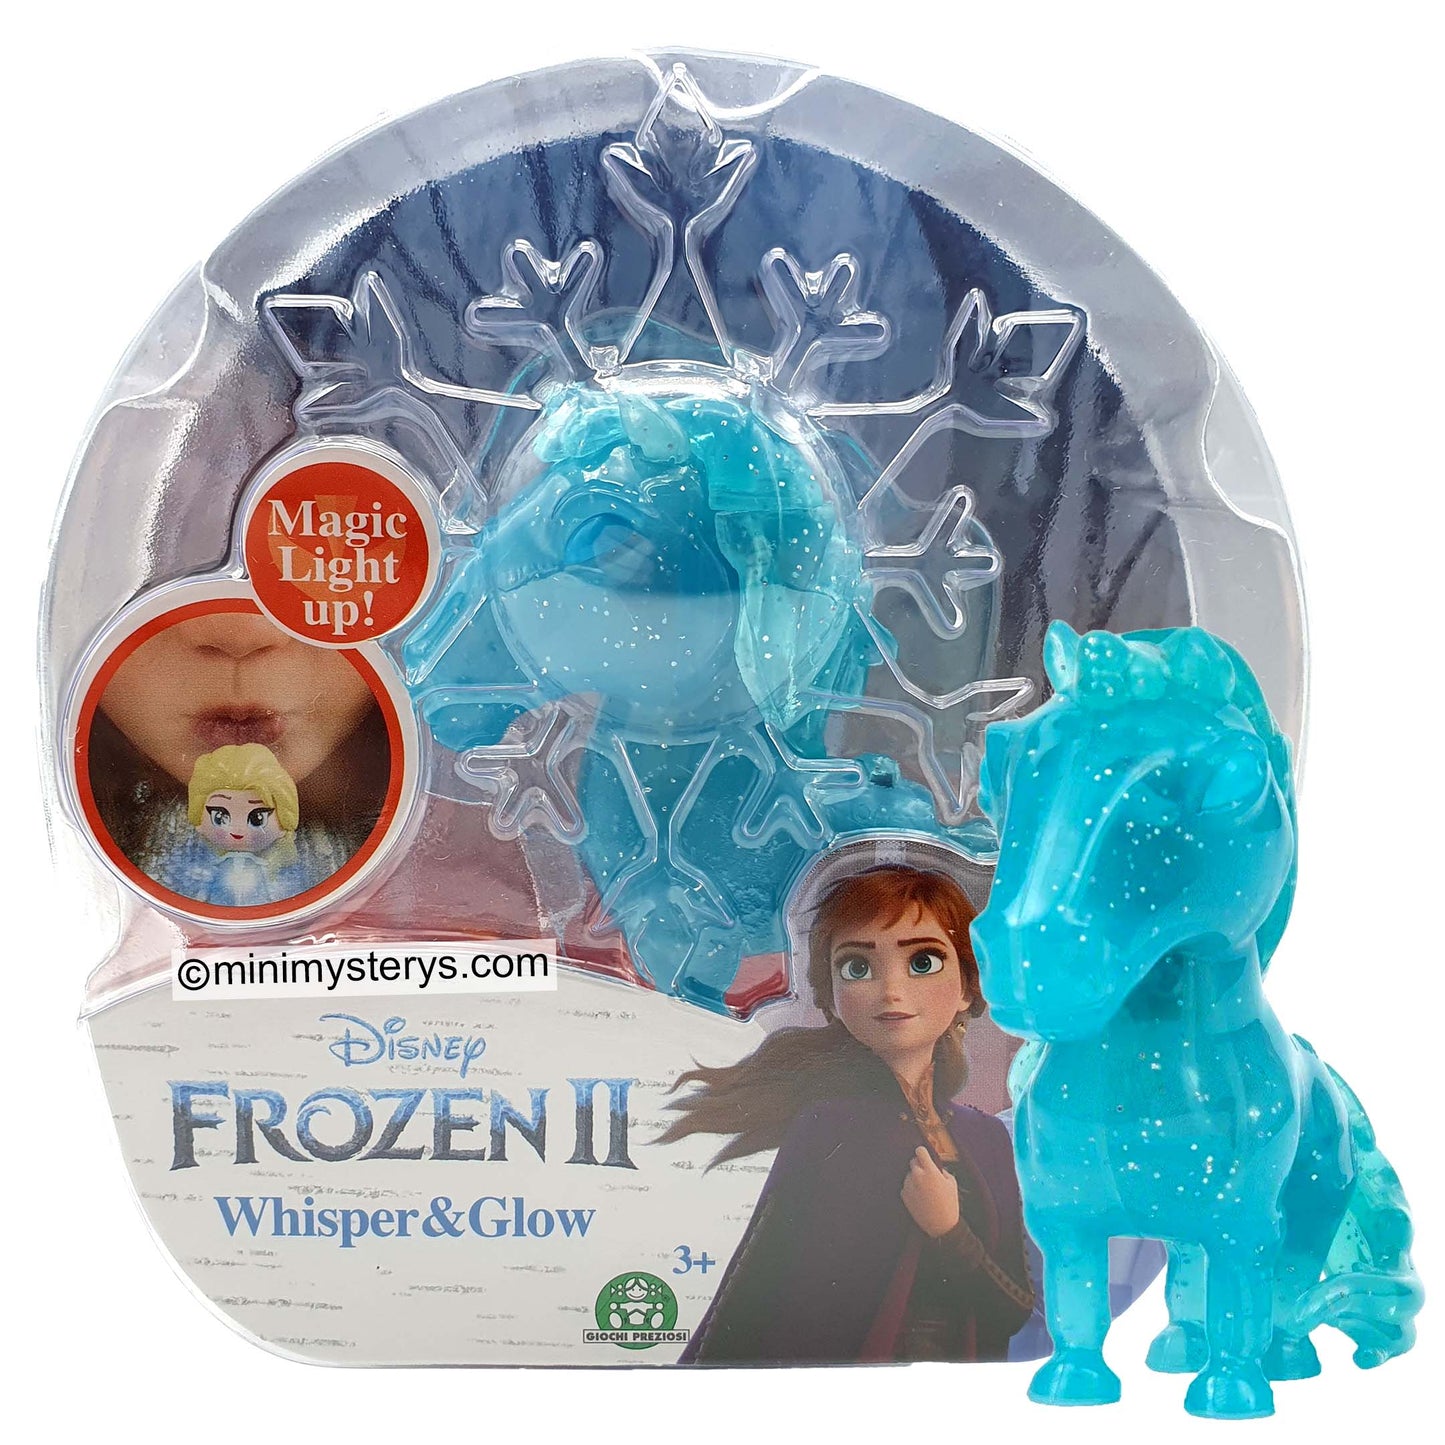 Disney Frozen 2 Whisper & Glow Figures - Choose Yours